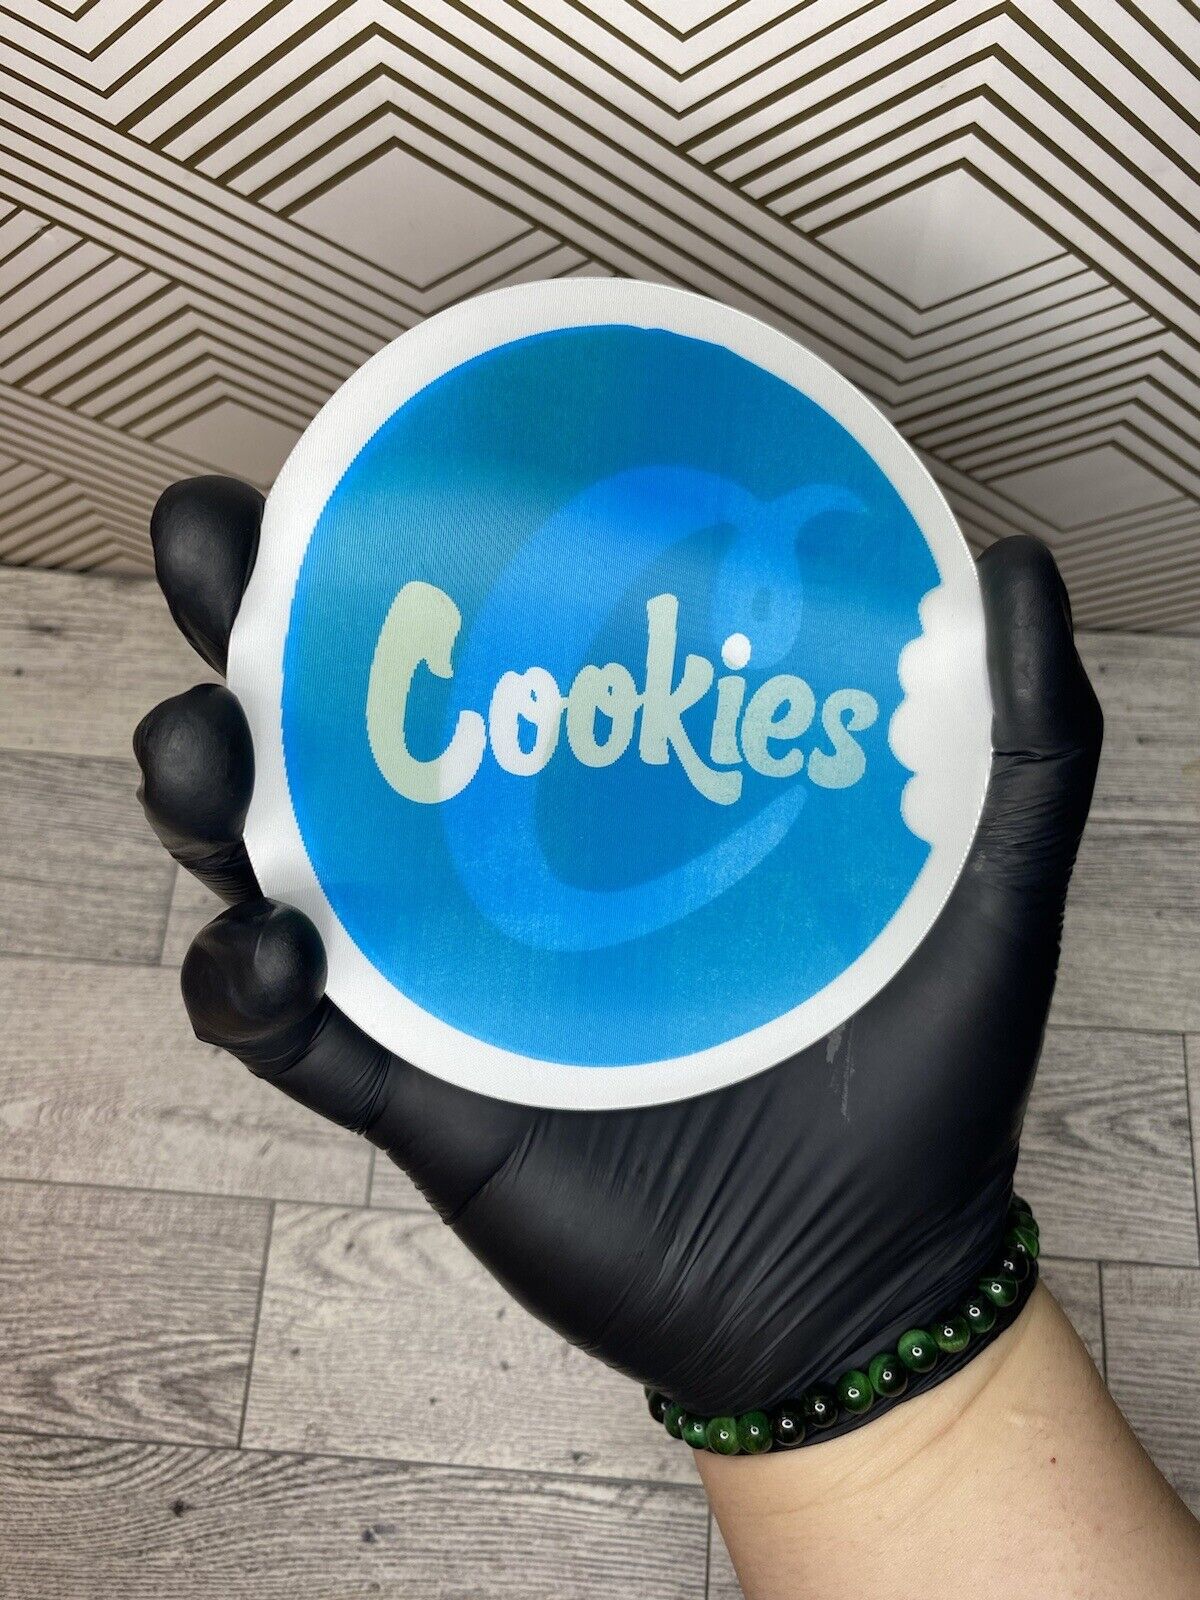 Cookies SF Berner 3D Lenticular Motion Moving Car Sticker Decal Peeker